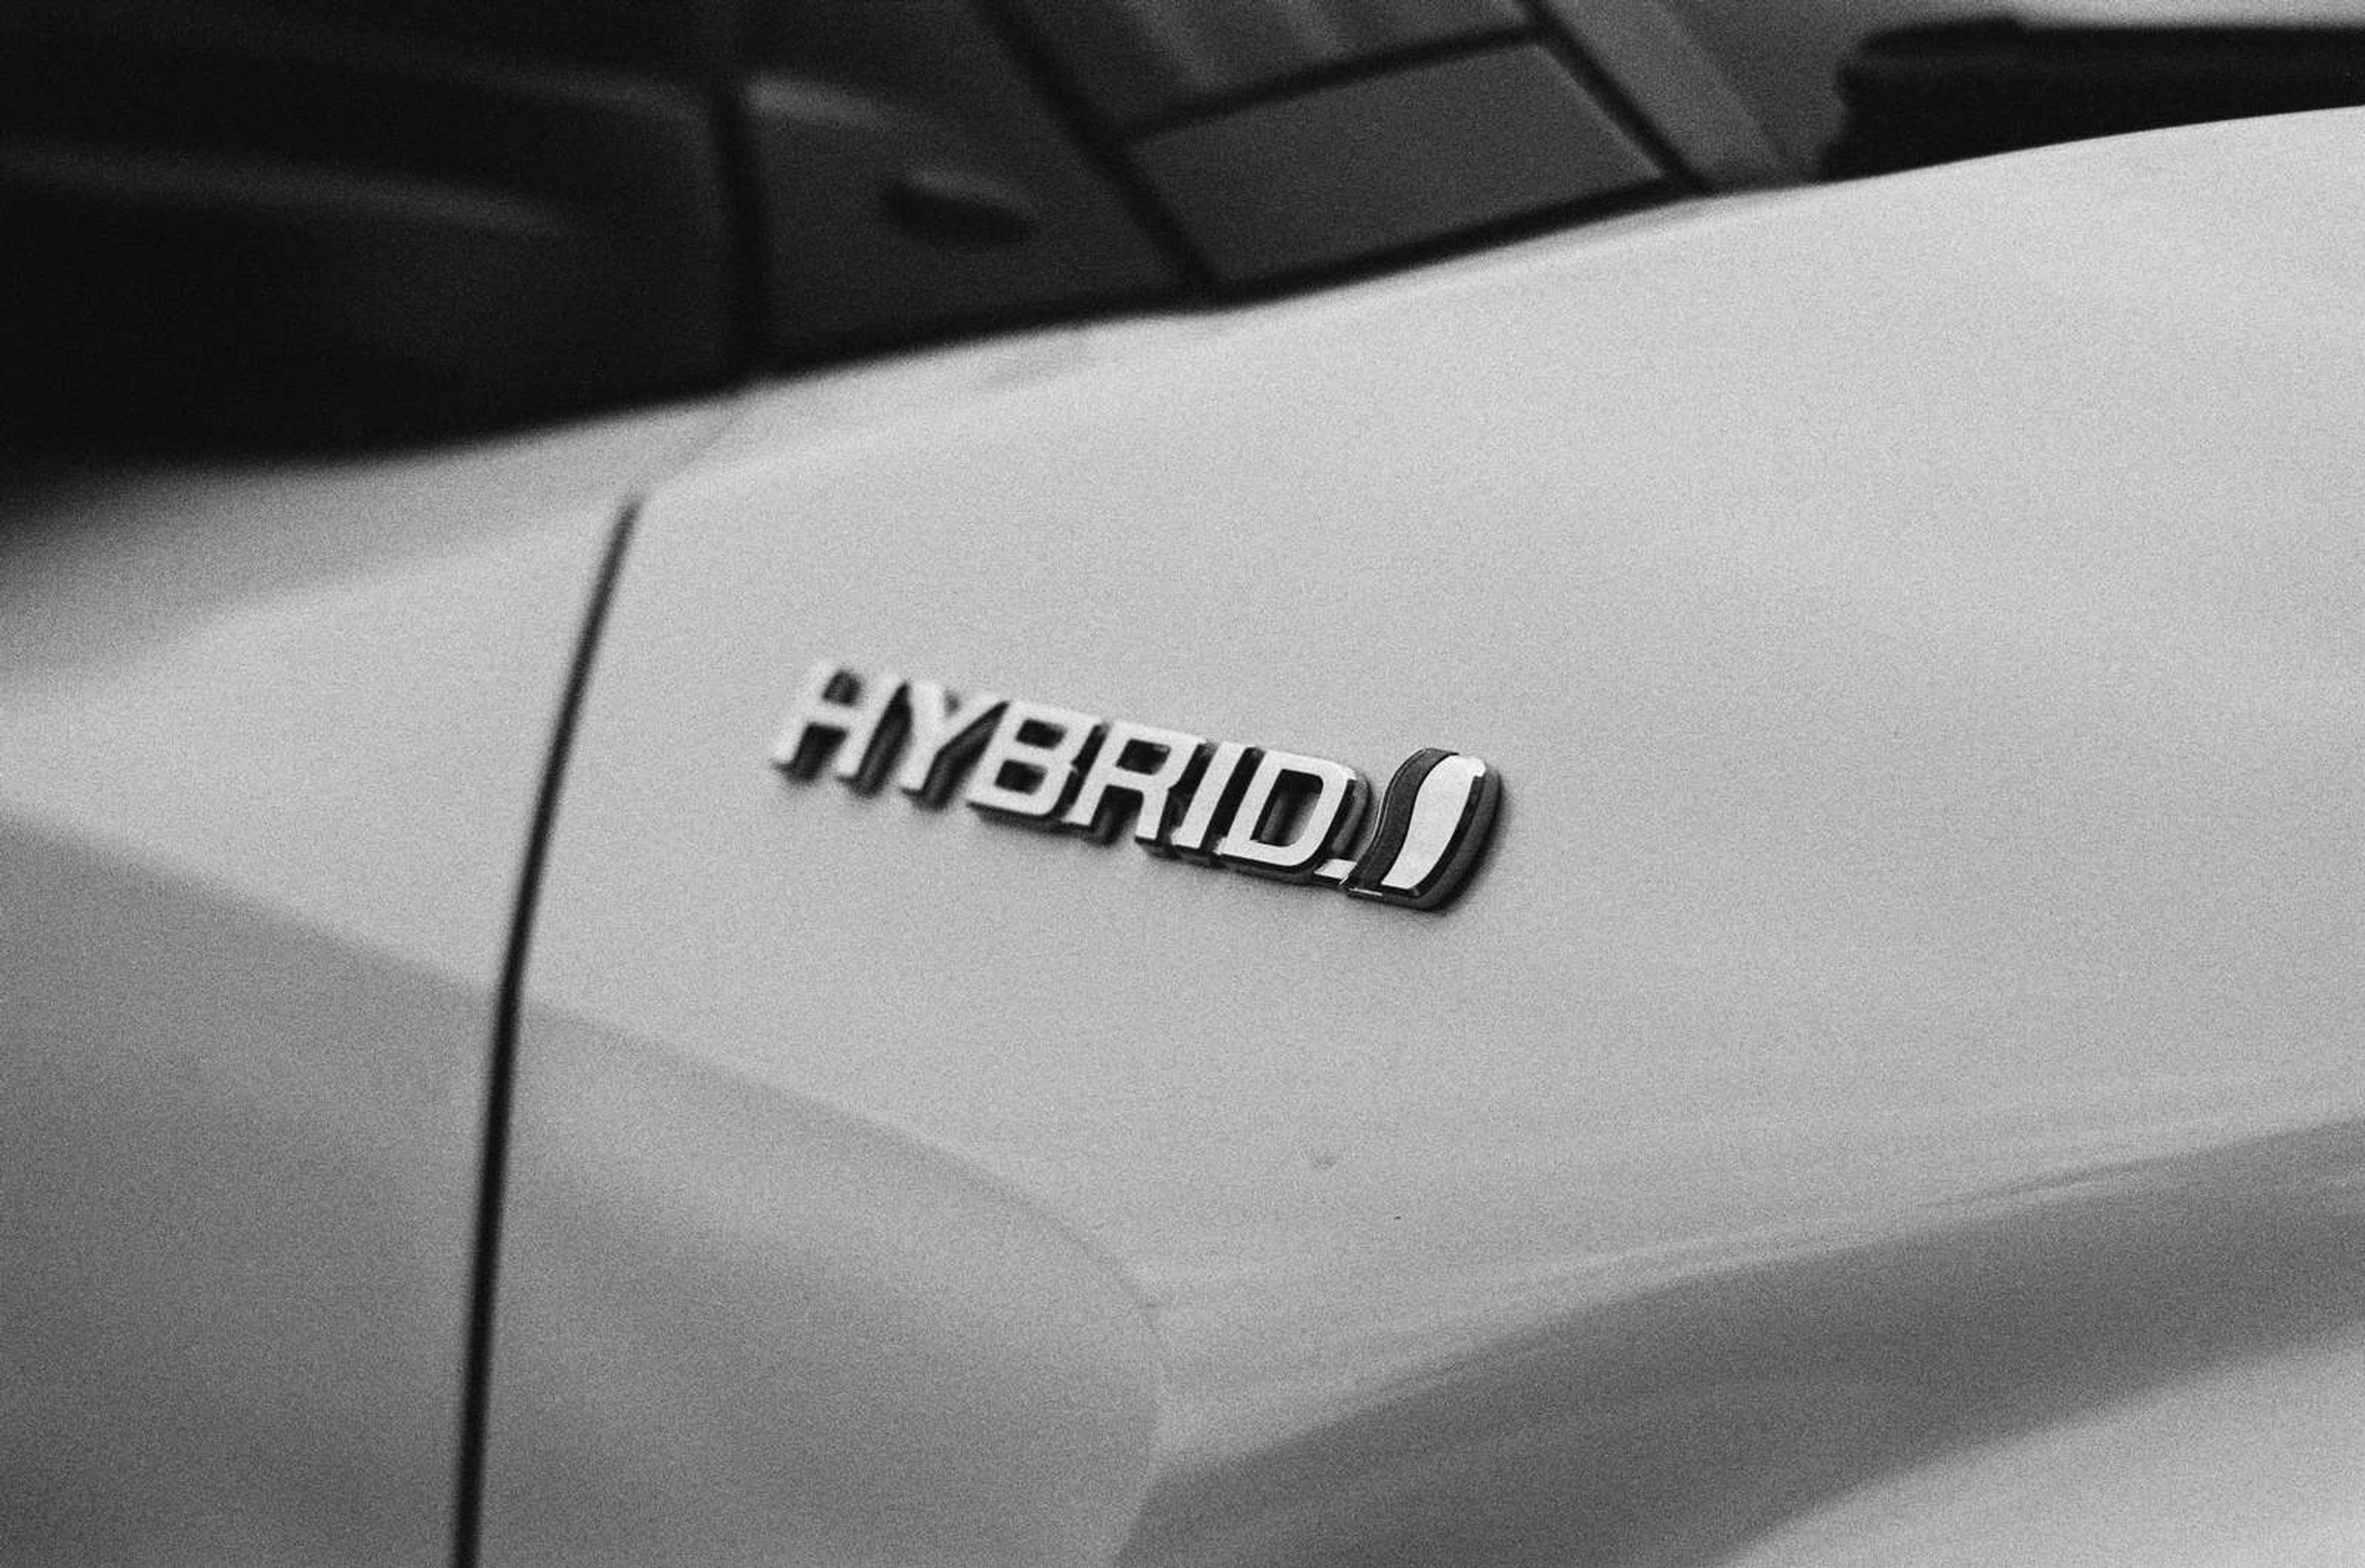 Mark of Hybrid Car